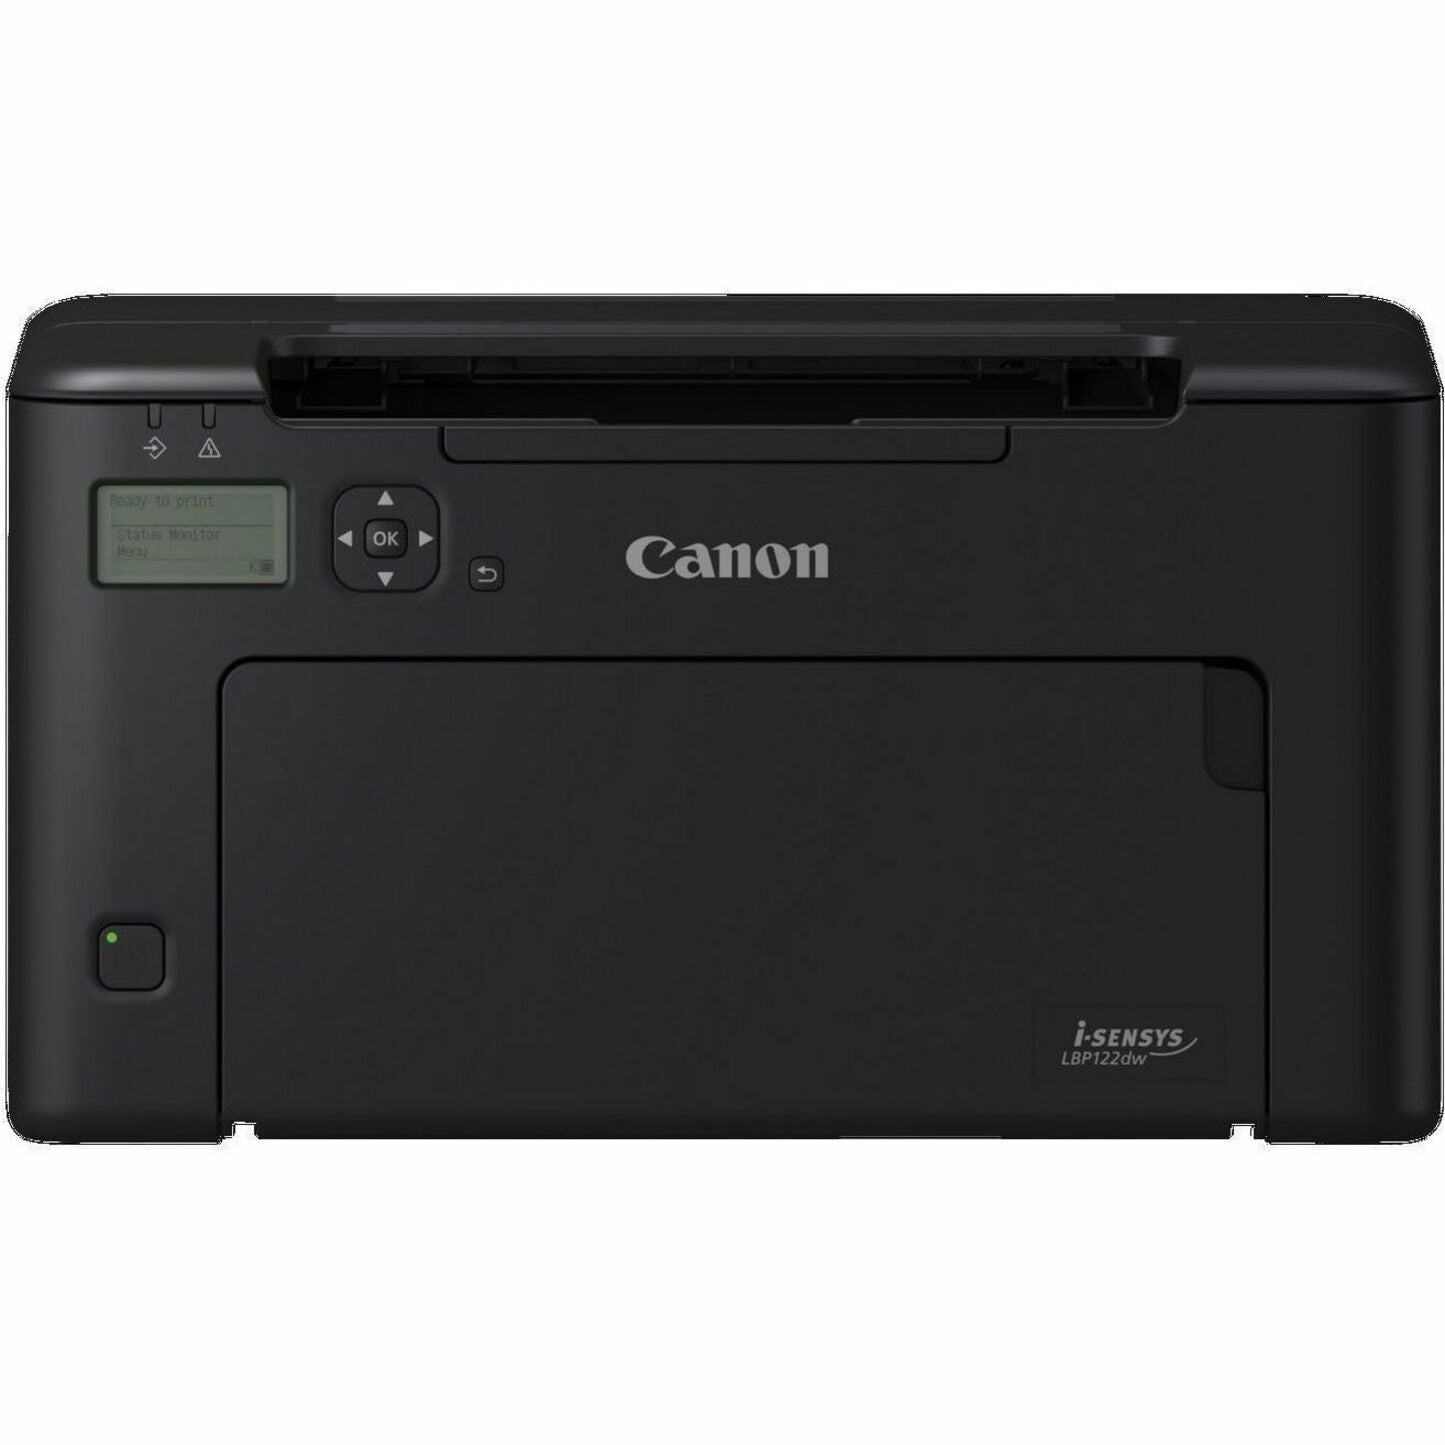 Canon 5620C006 imageCLASS LBP122dw kabelloser Duplex-Laserdrucker Monochrom 30 ppm 600 x 600 dpi